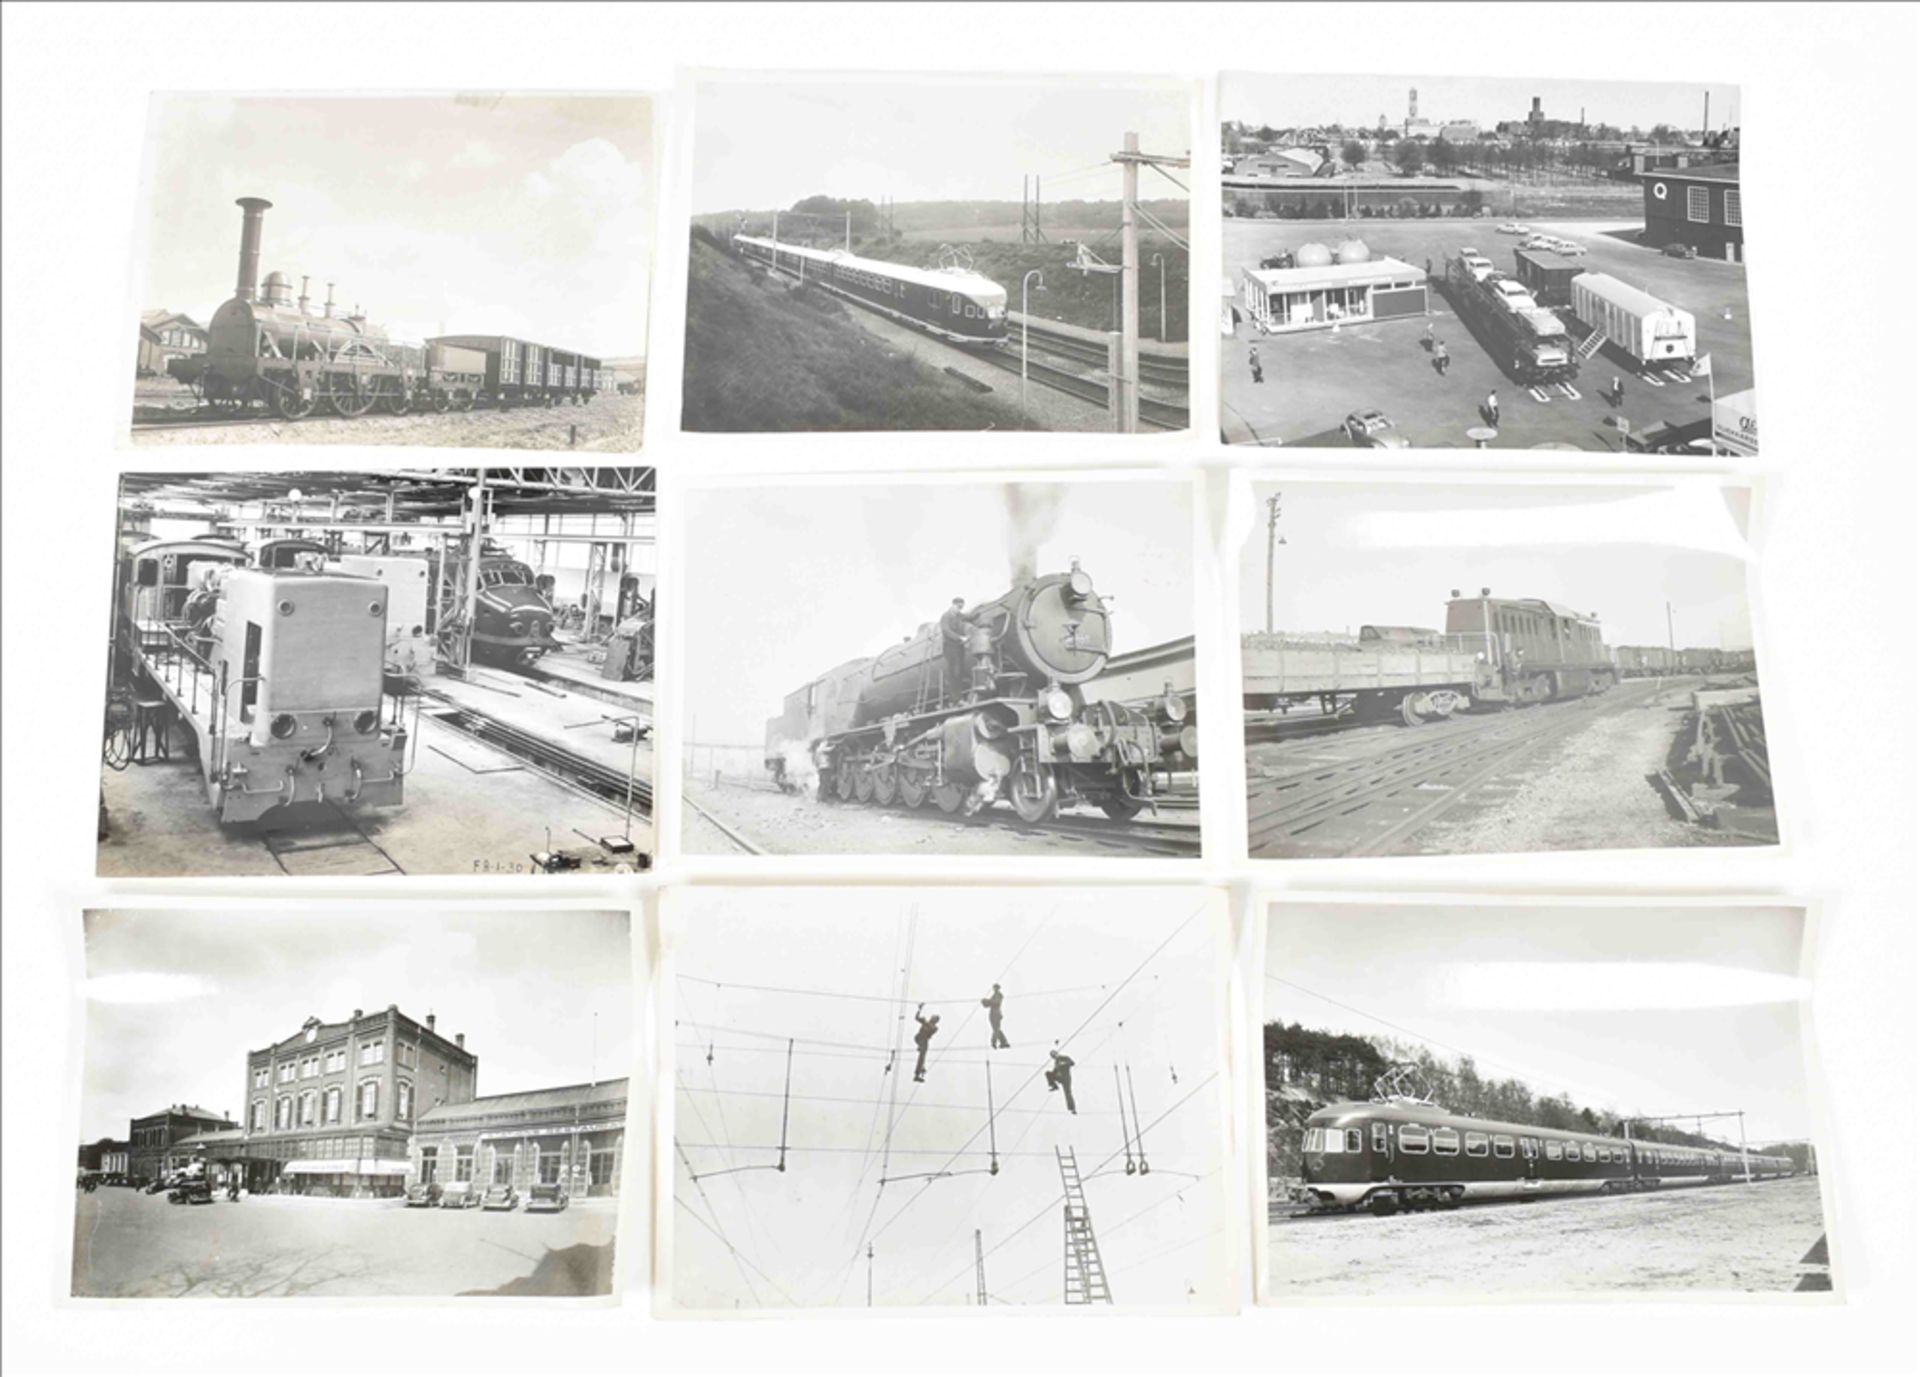 55 photos of trains, railways, train stations, etc. - Image 2 of 9